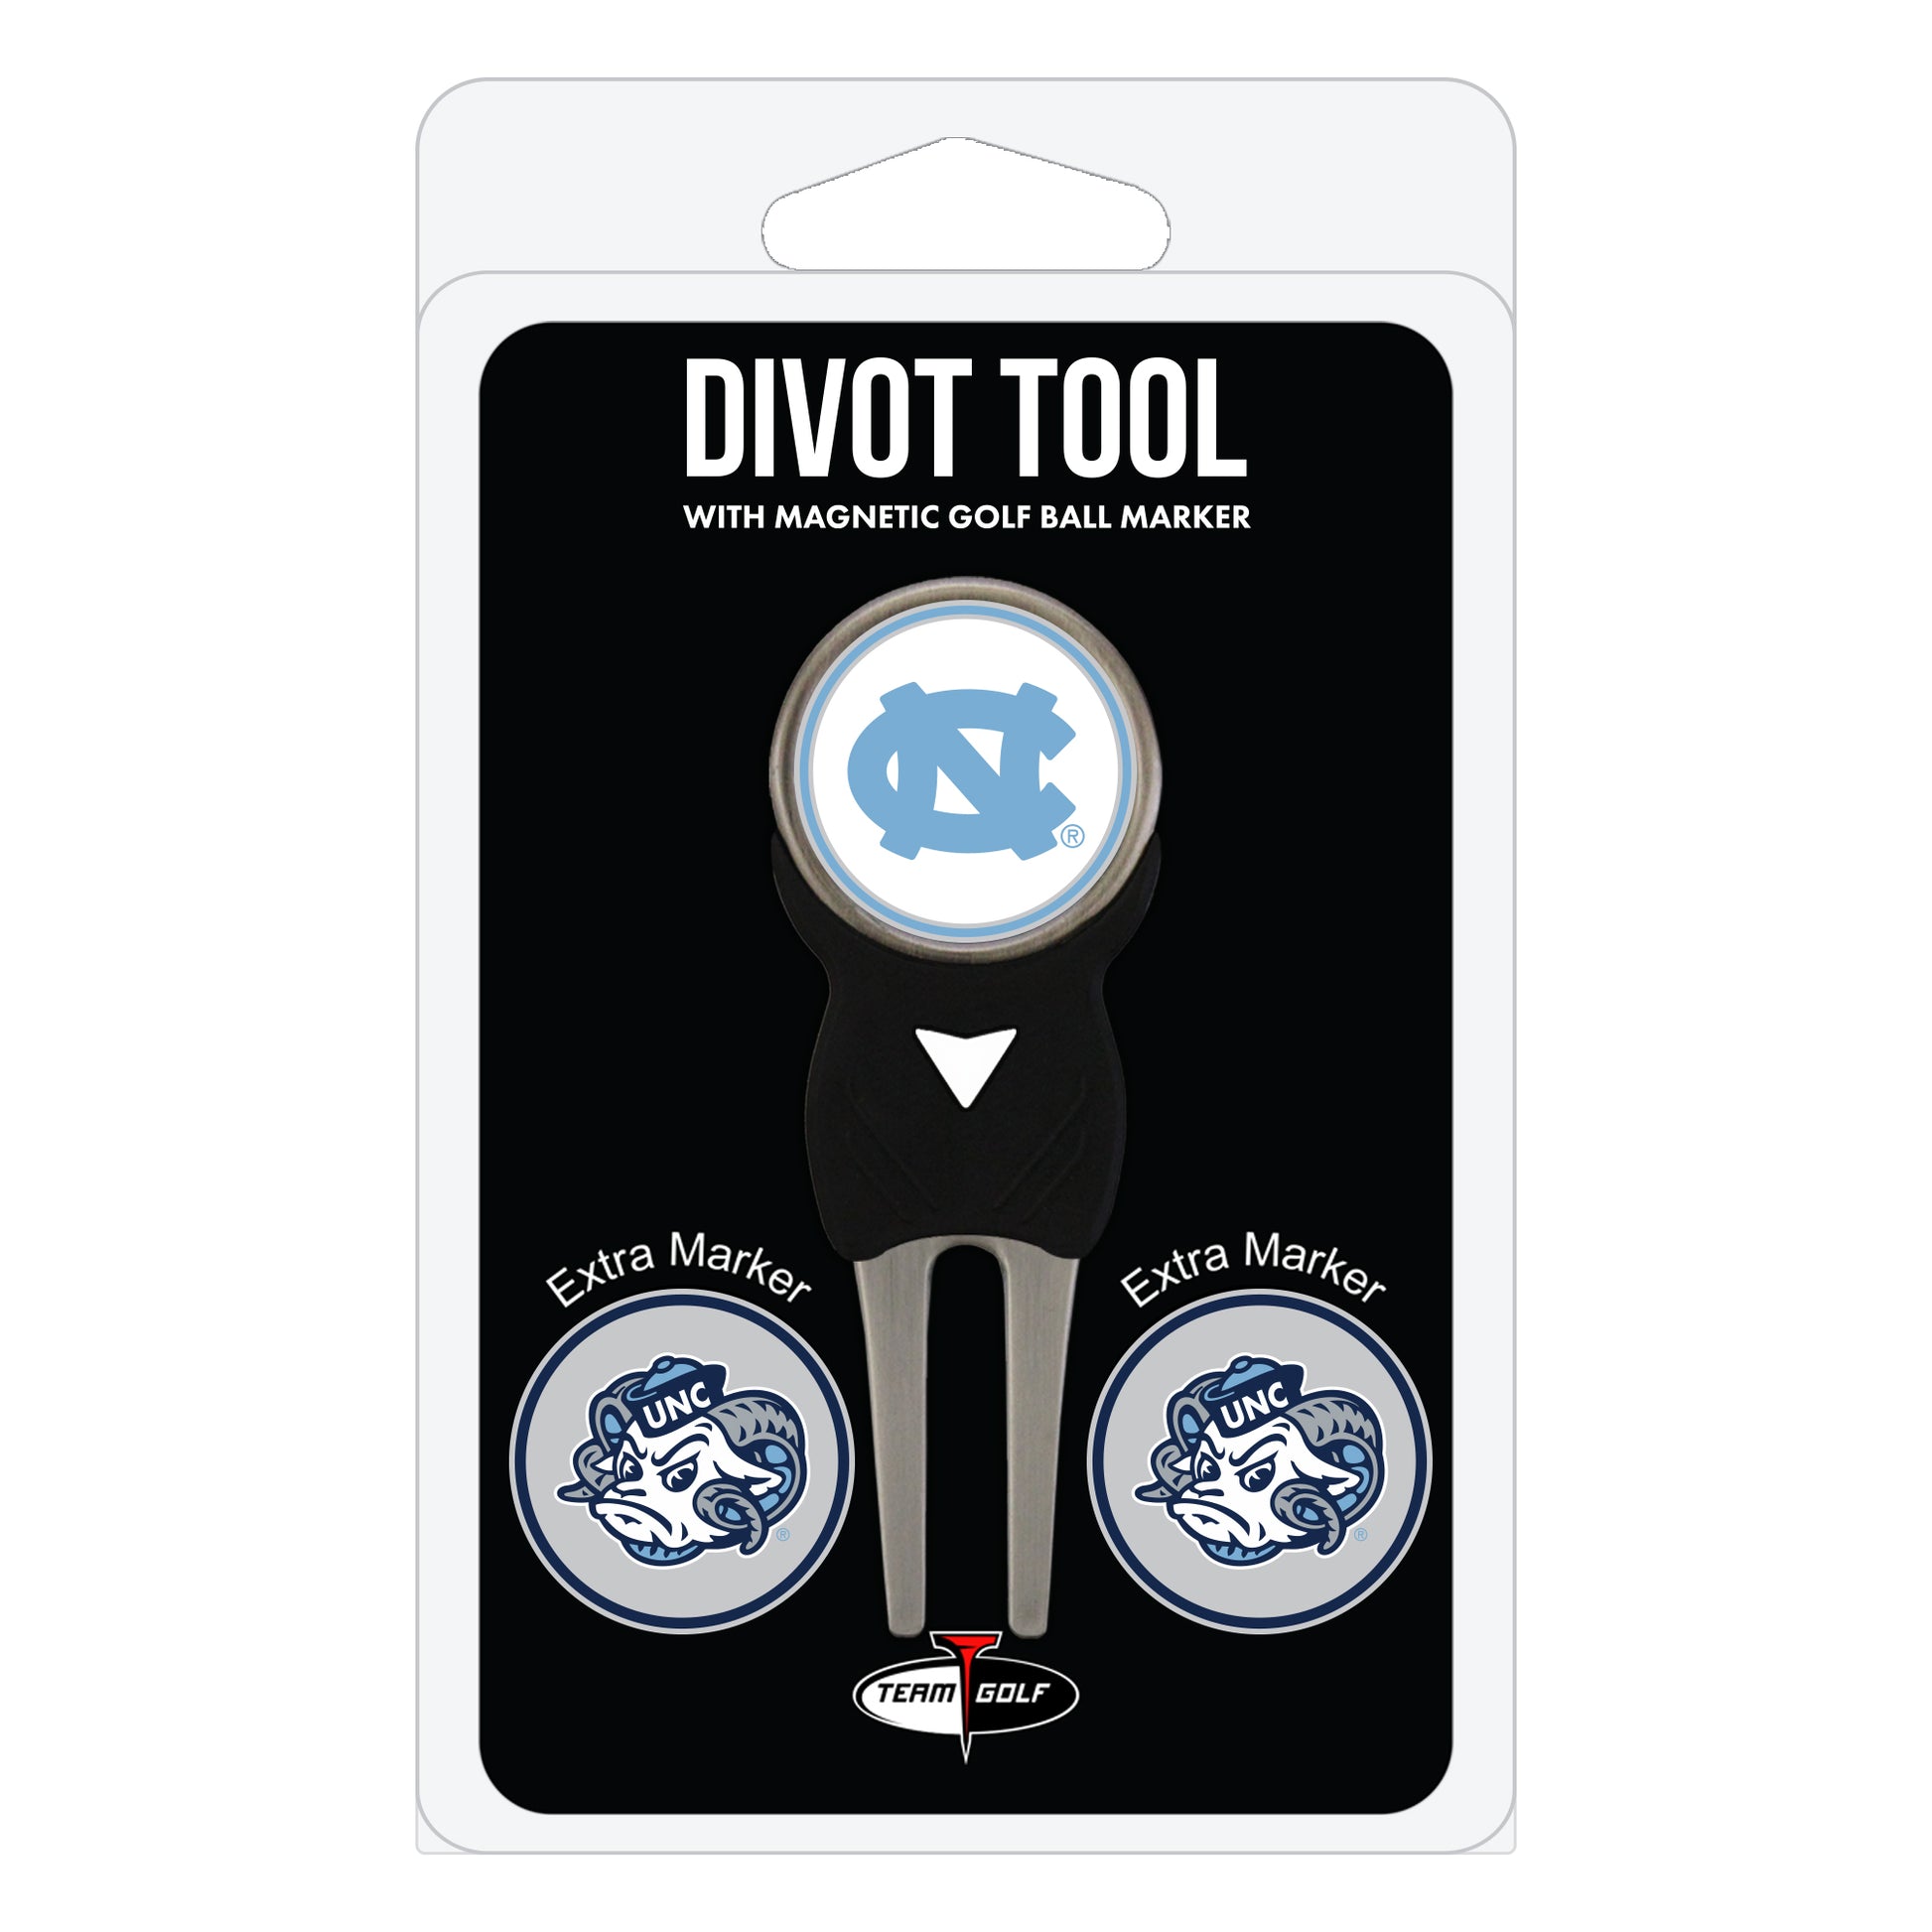 NCAA personalized golf divot tool - unc tar heels